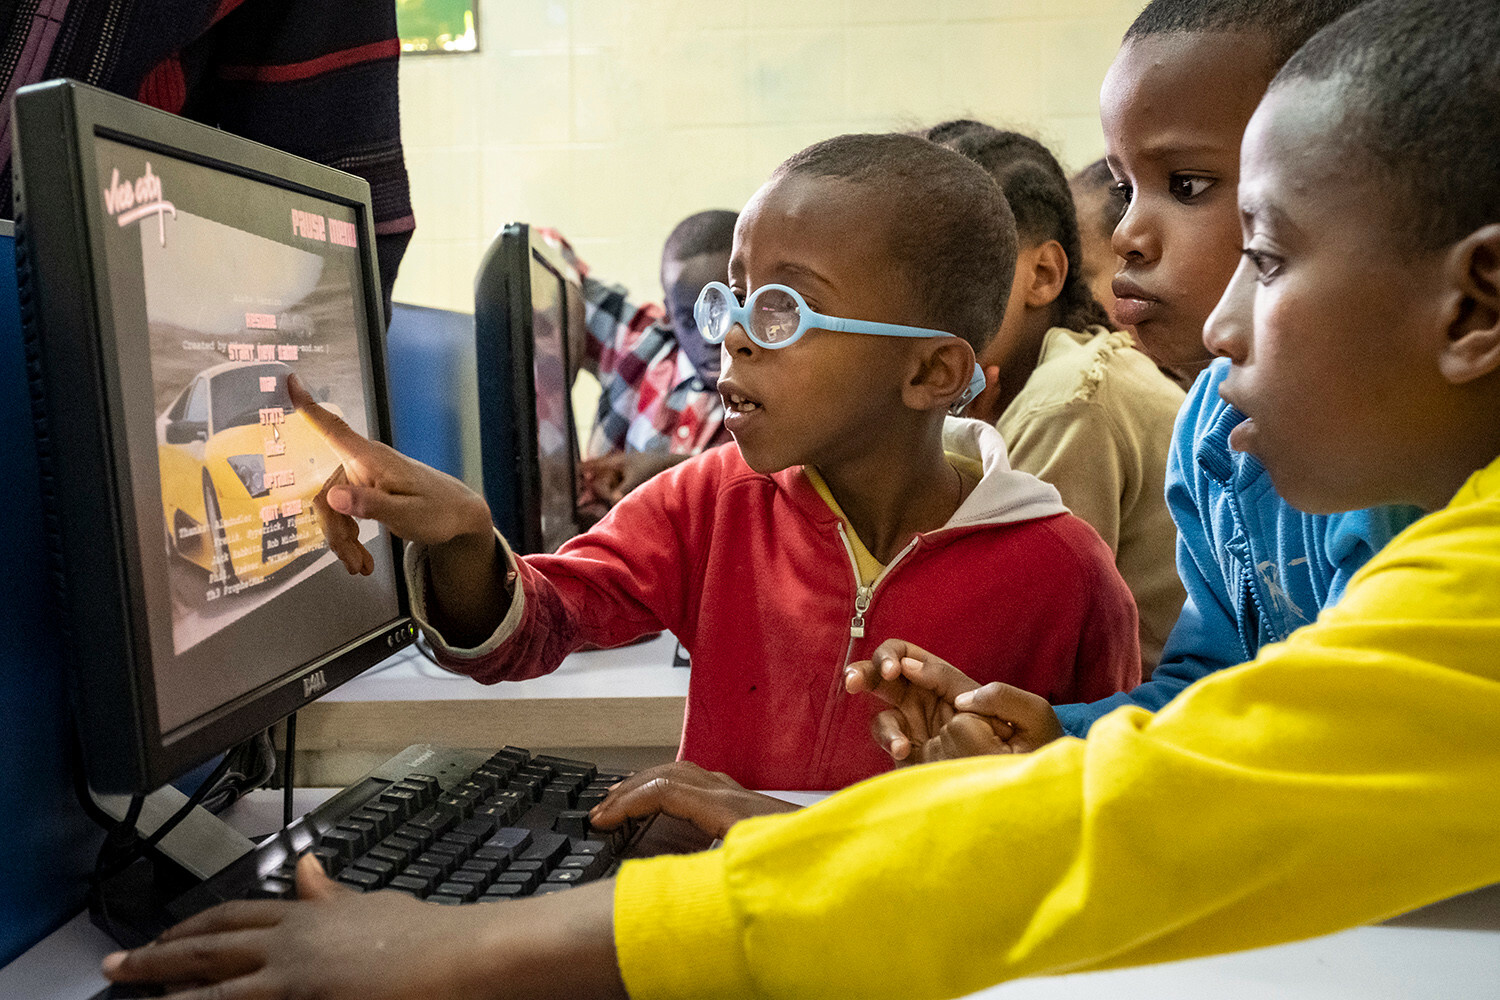 Kinder in Agohelma am Computer